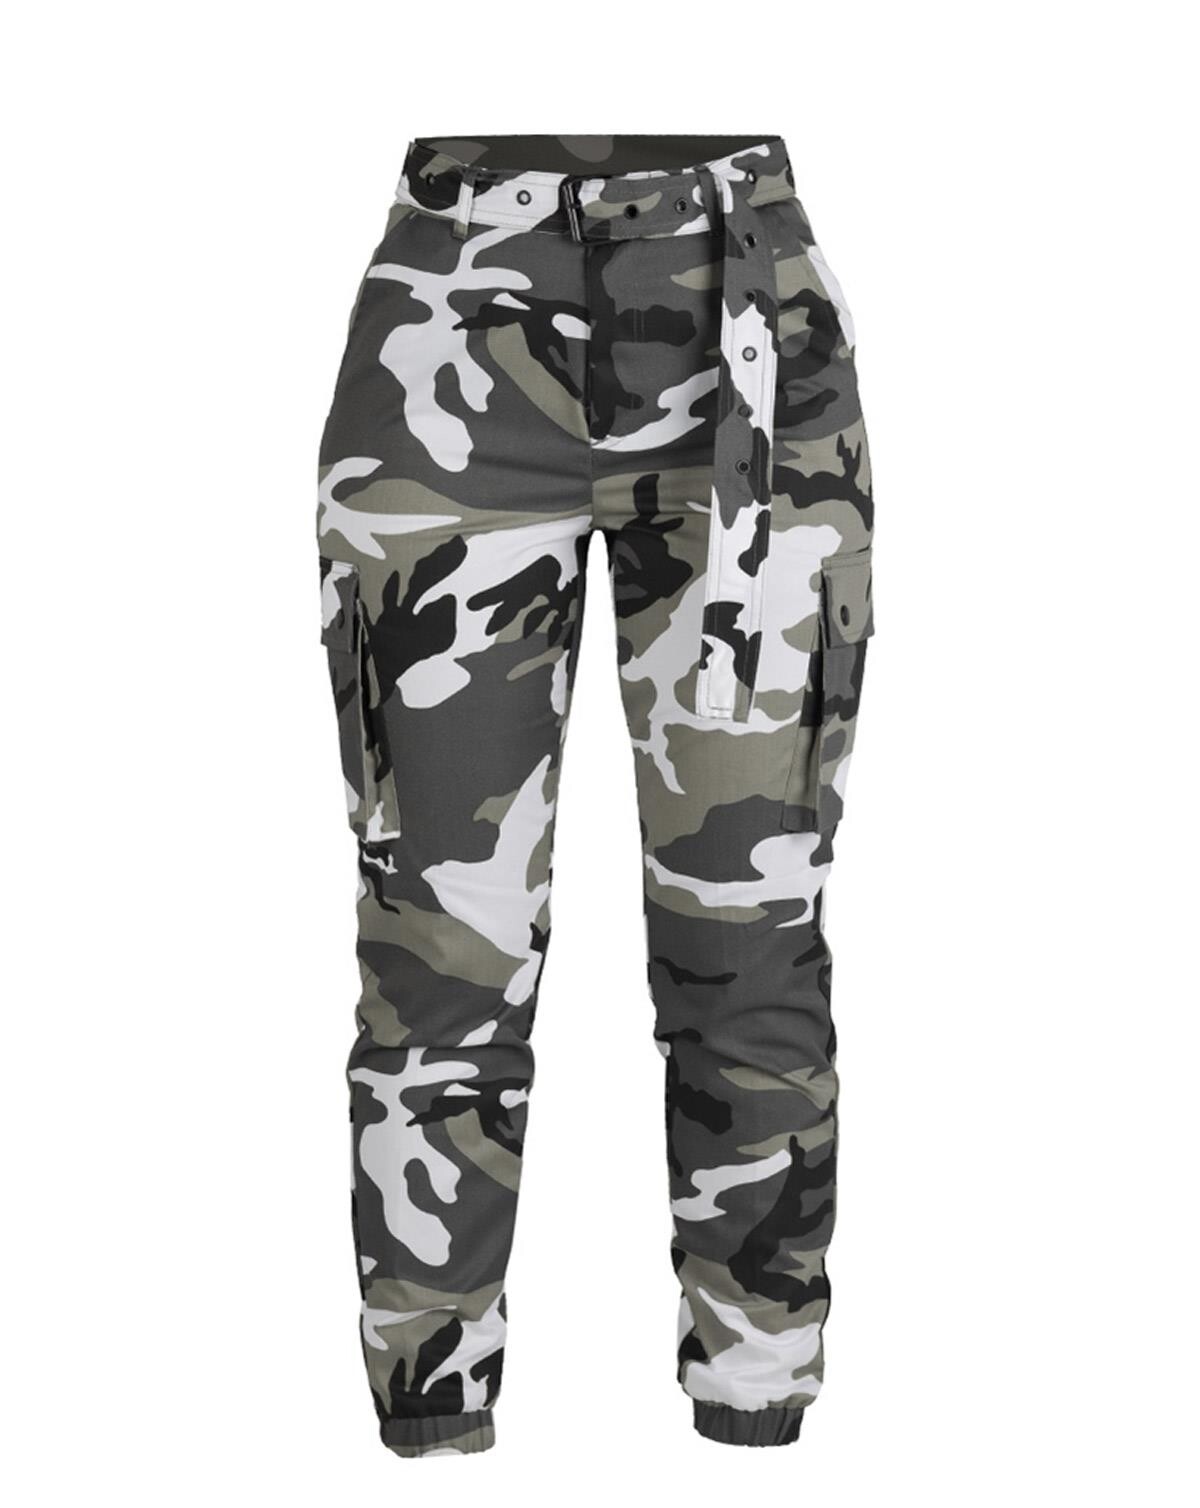 6: Mil-Tec Army Pants for Women (Urban Camo, M)